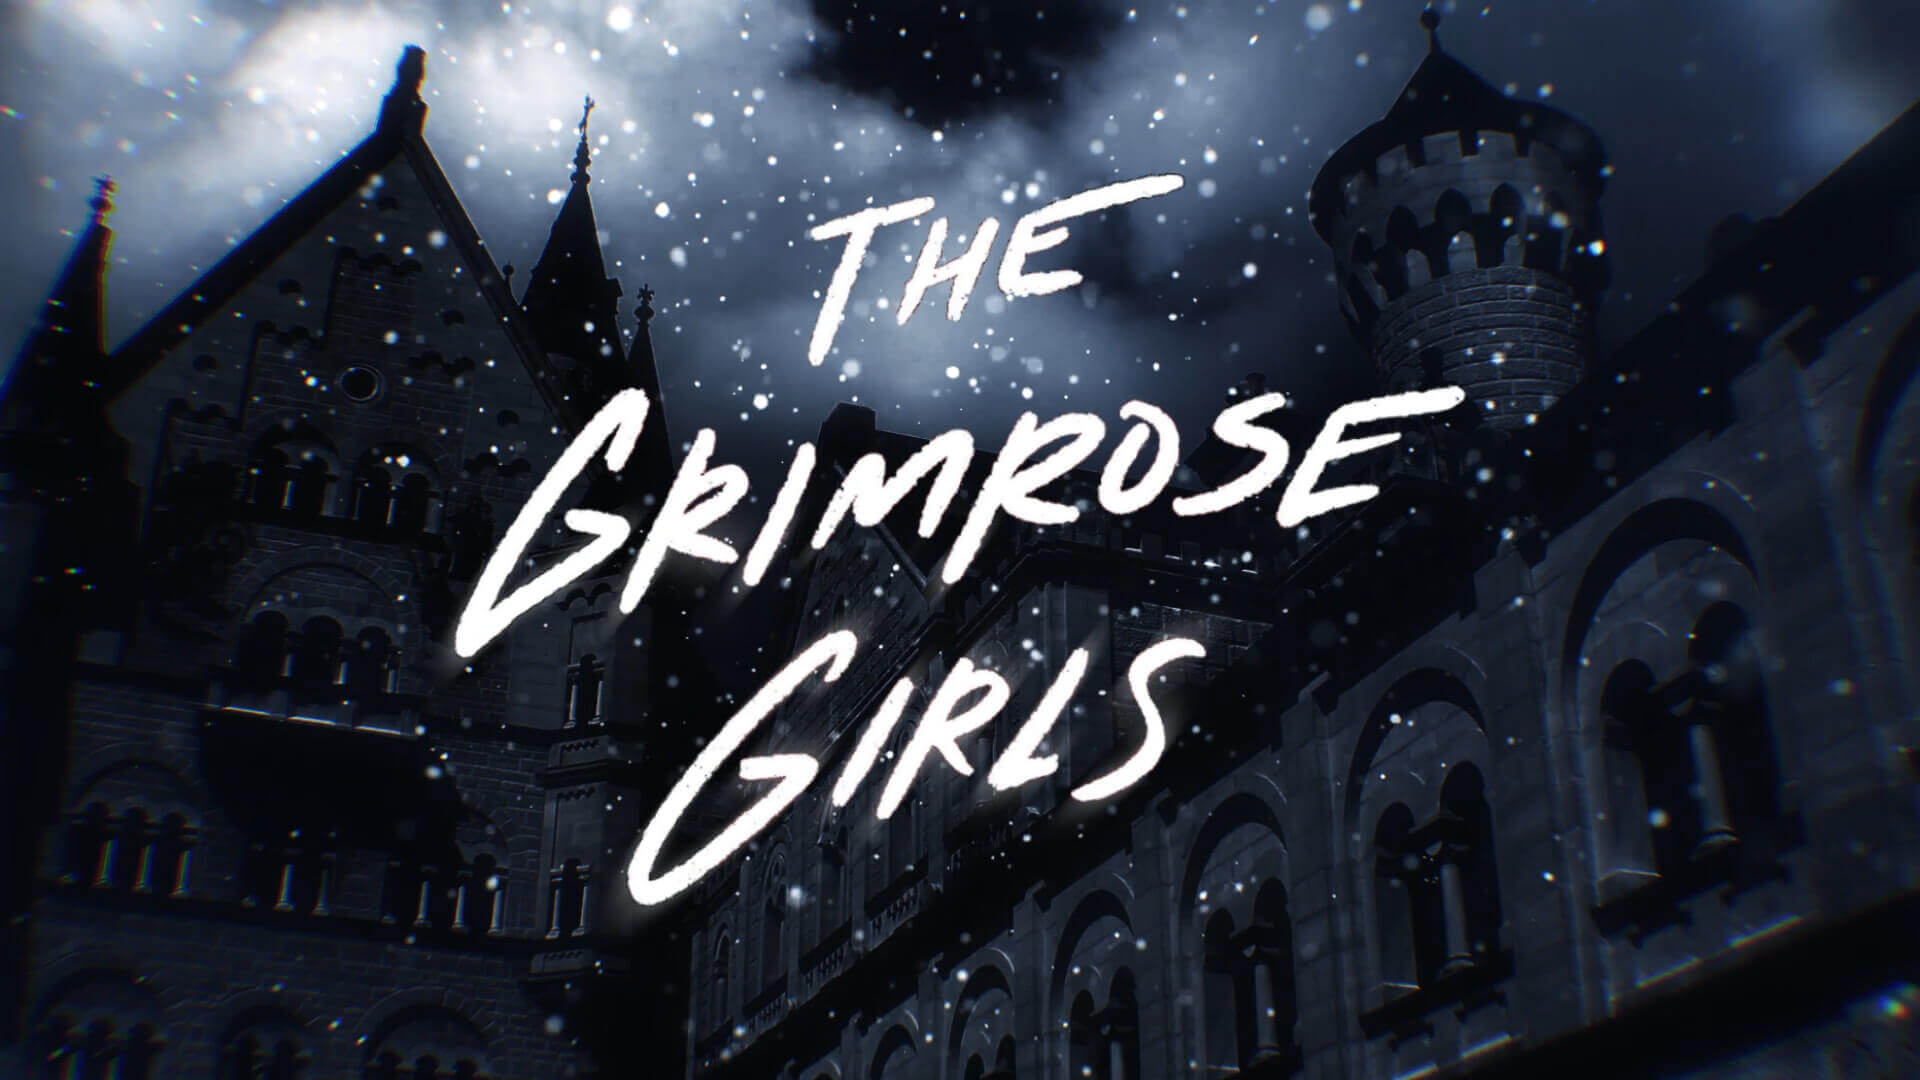 The Grimrose Girls Official Trailer